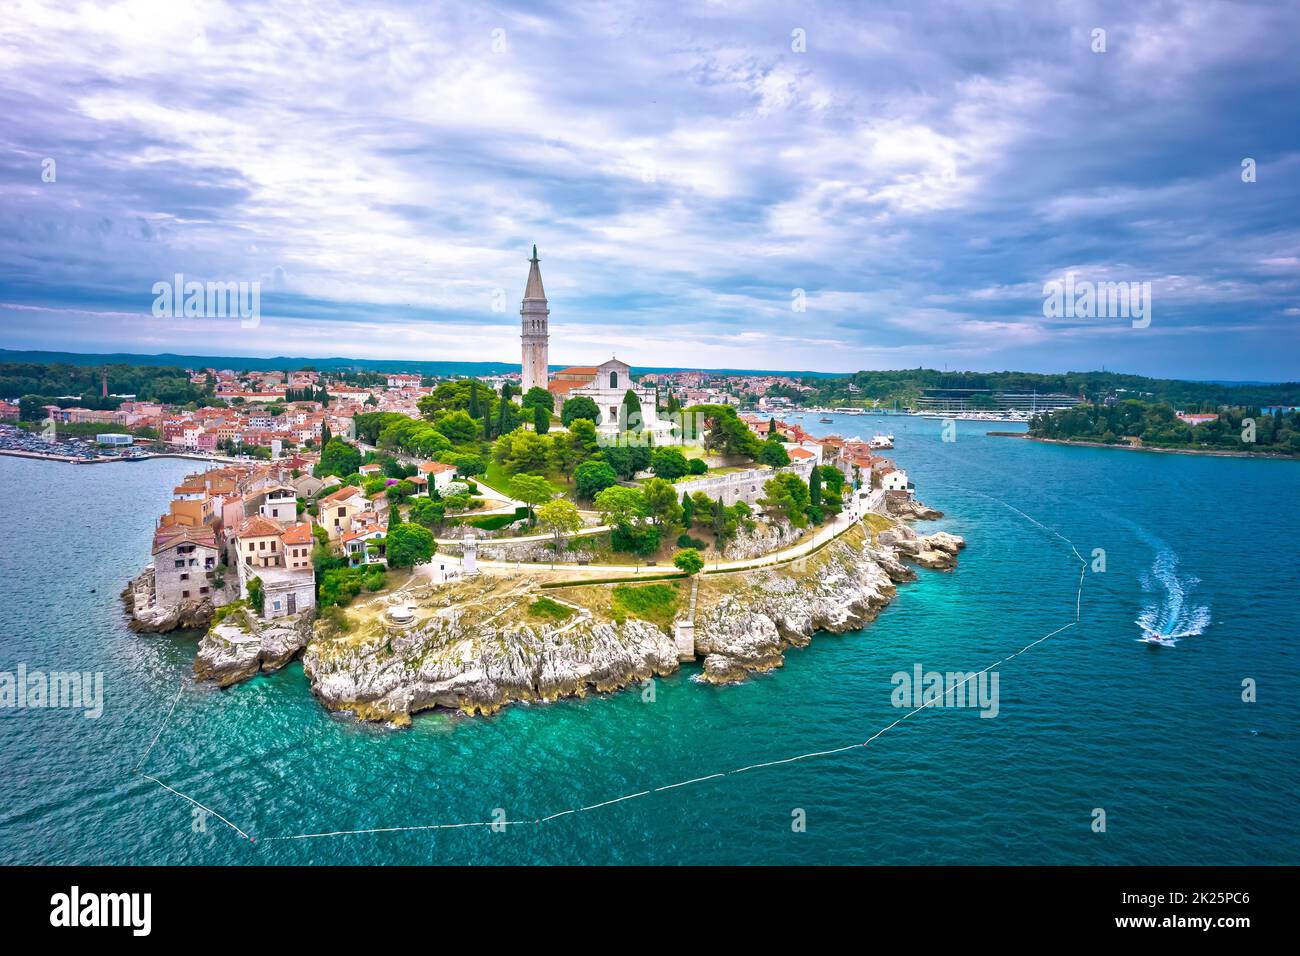 Rovinj waterfront. Town of Rovinj historic peninsula aerial view, famous tourist destination Stock Photo